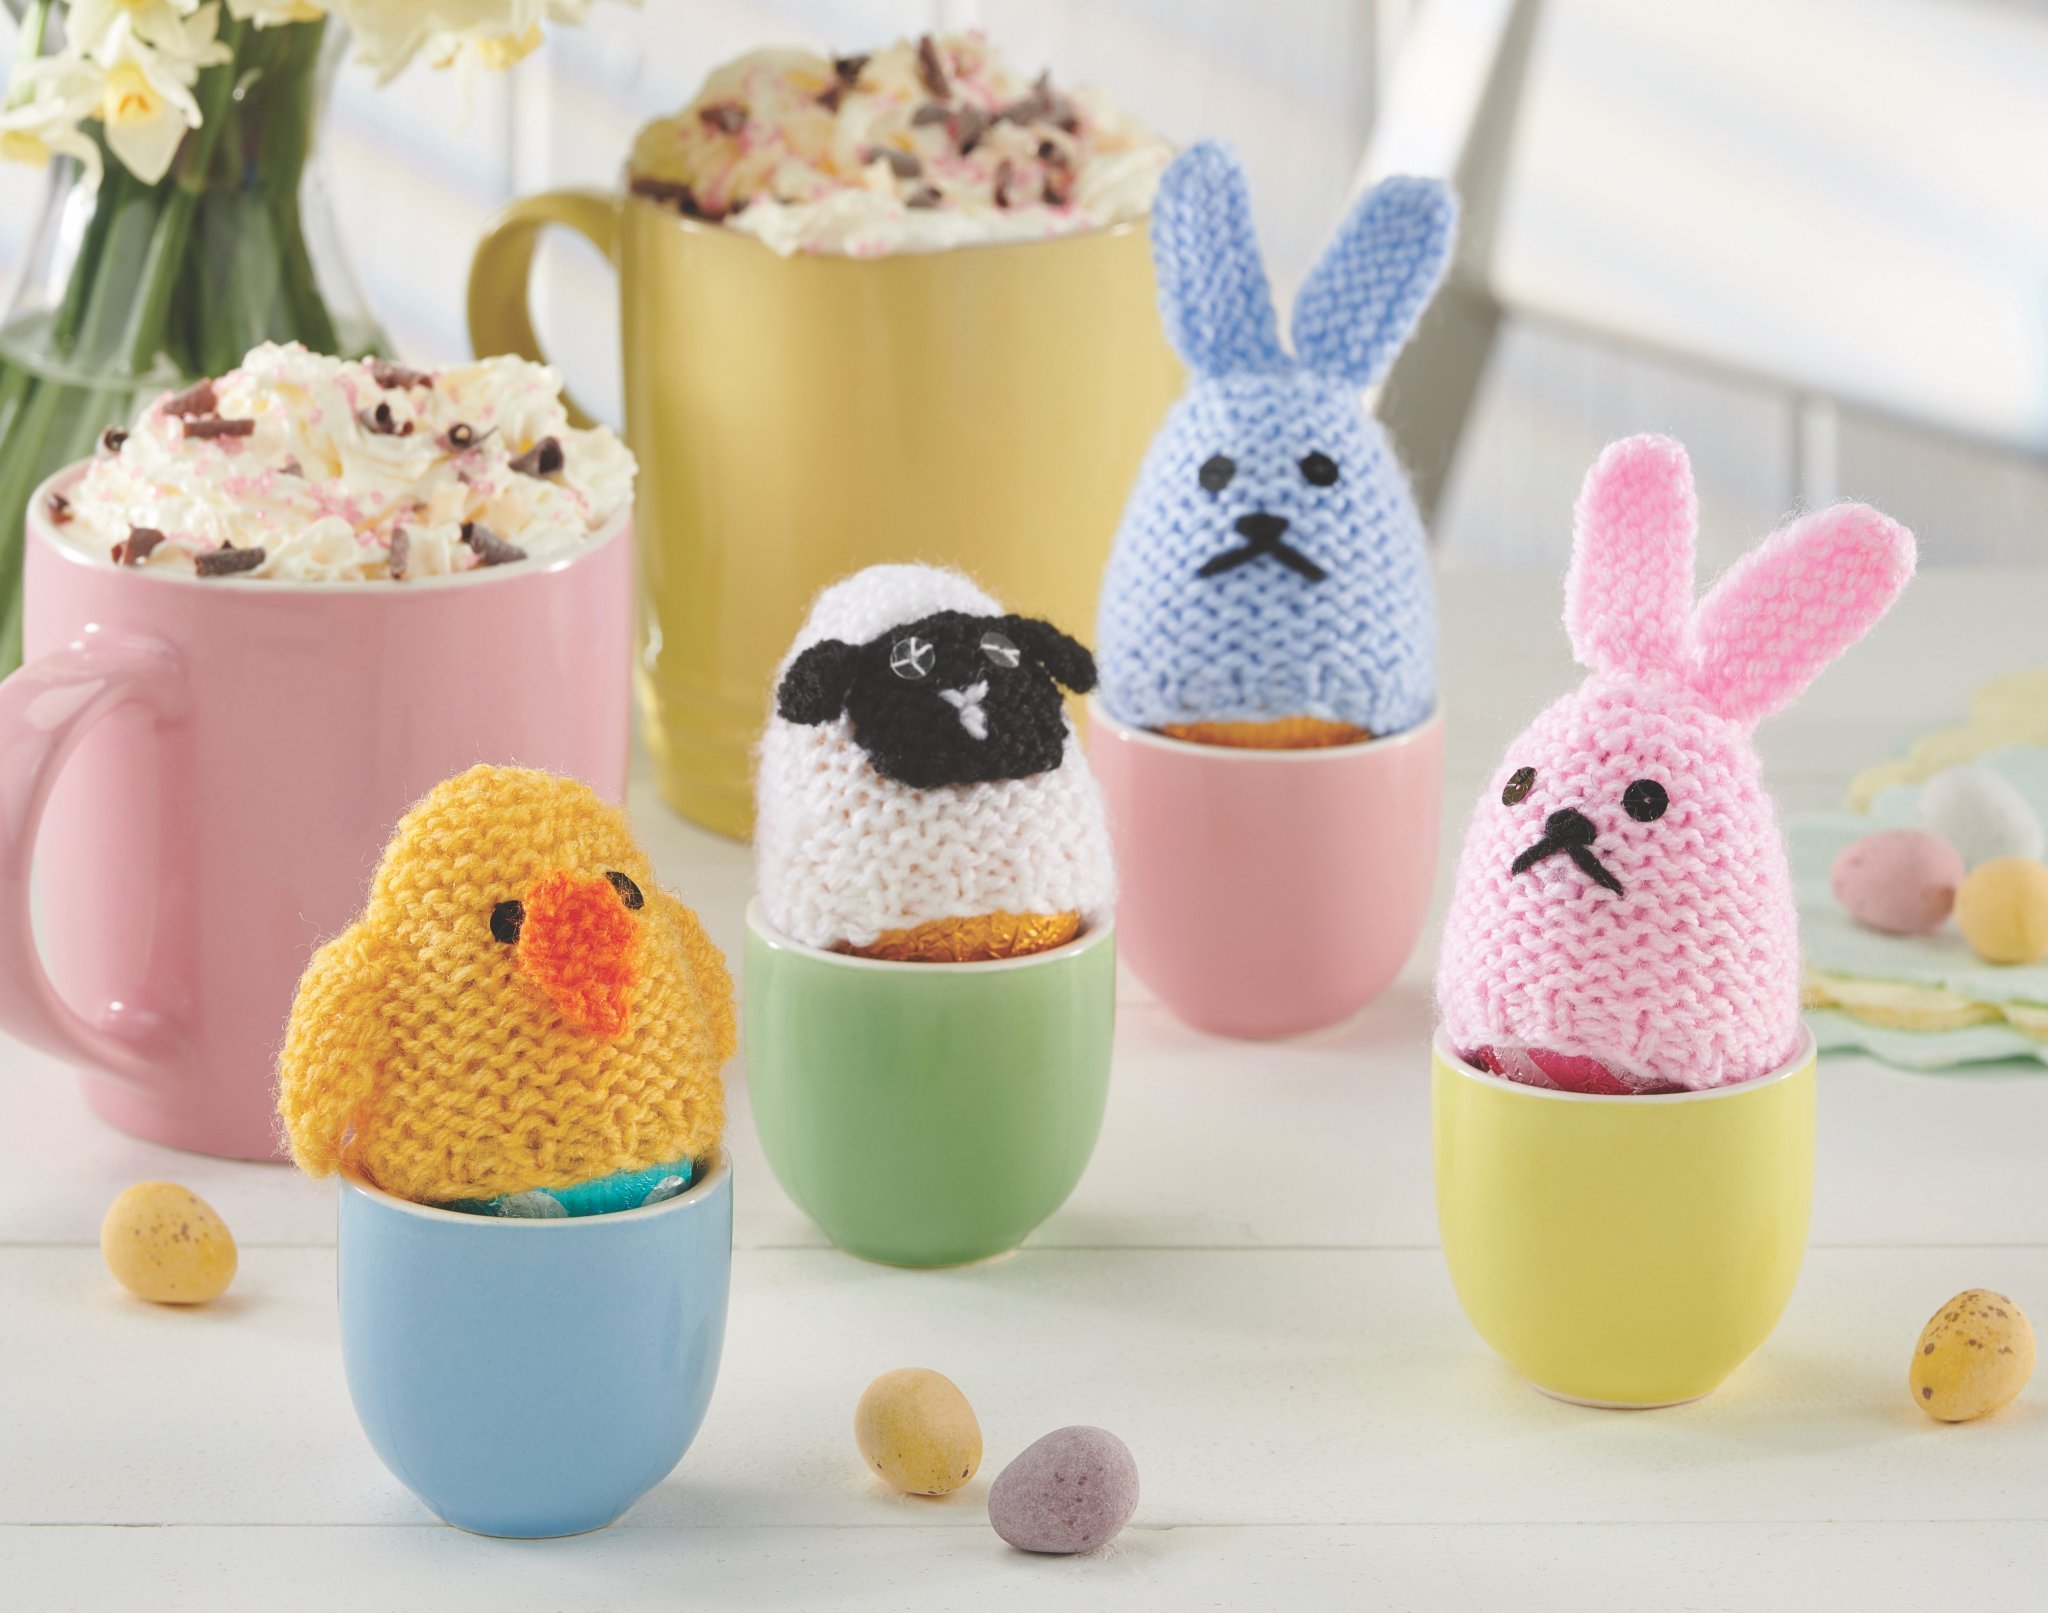 Cute Easter craft ideas